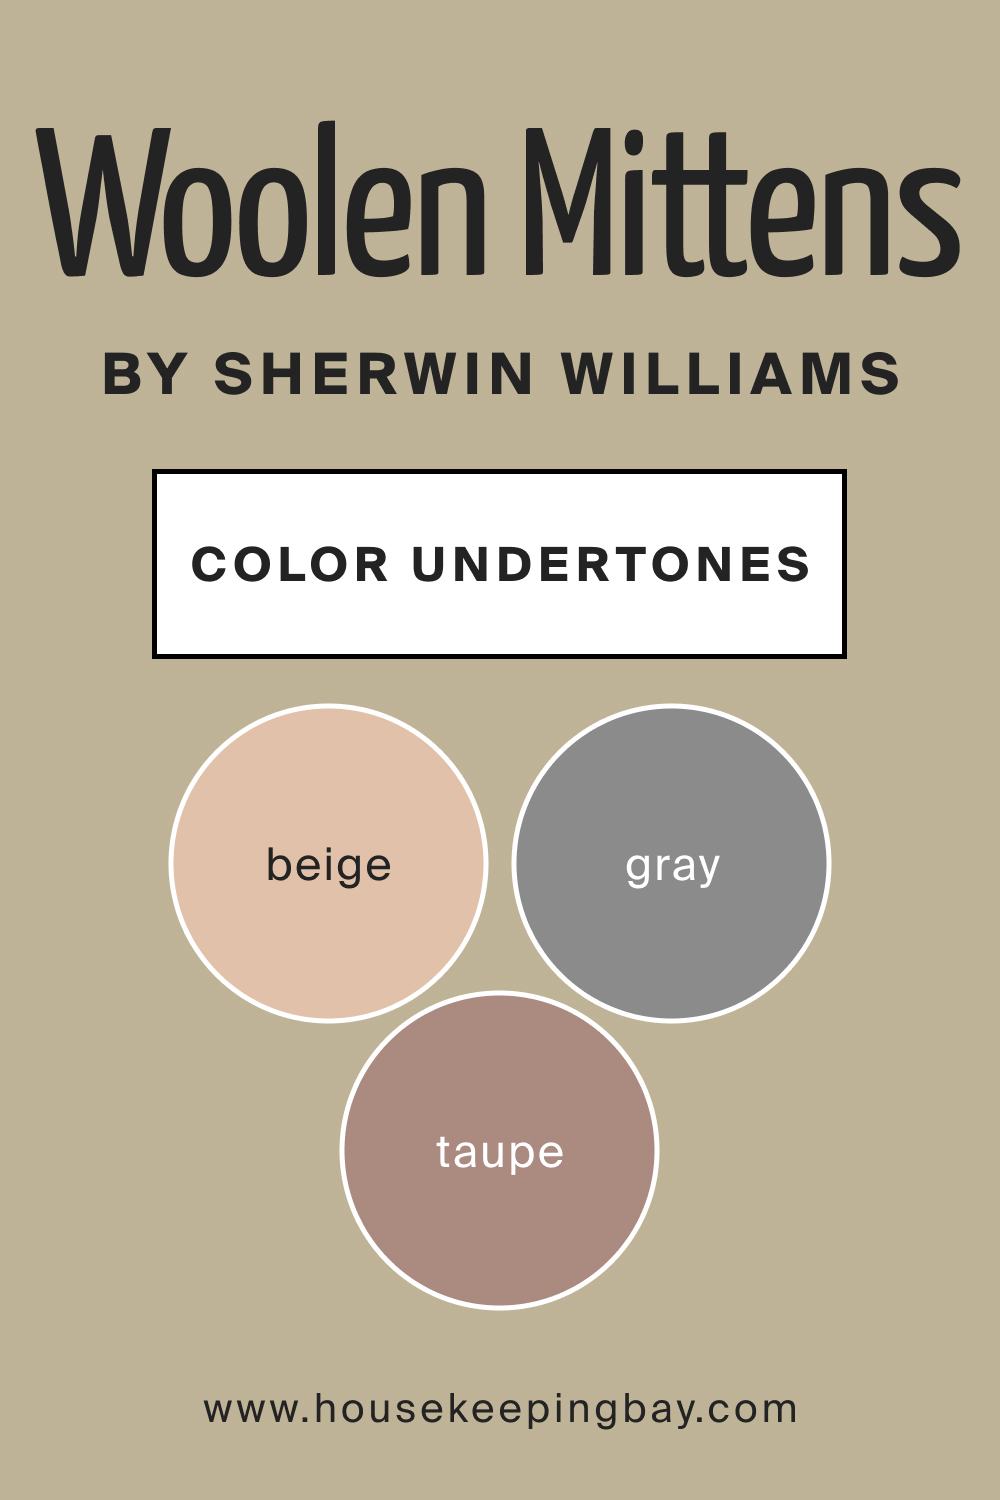 SW 9526 Woolen Mittens by Sherwin Williams Color Undertone